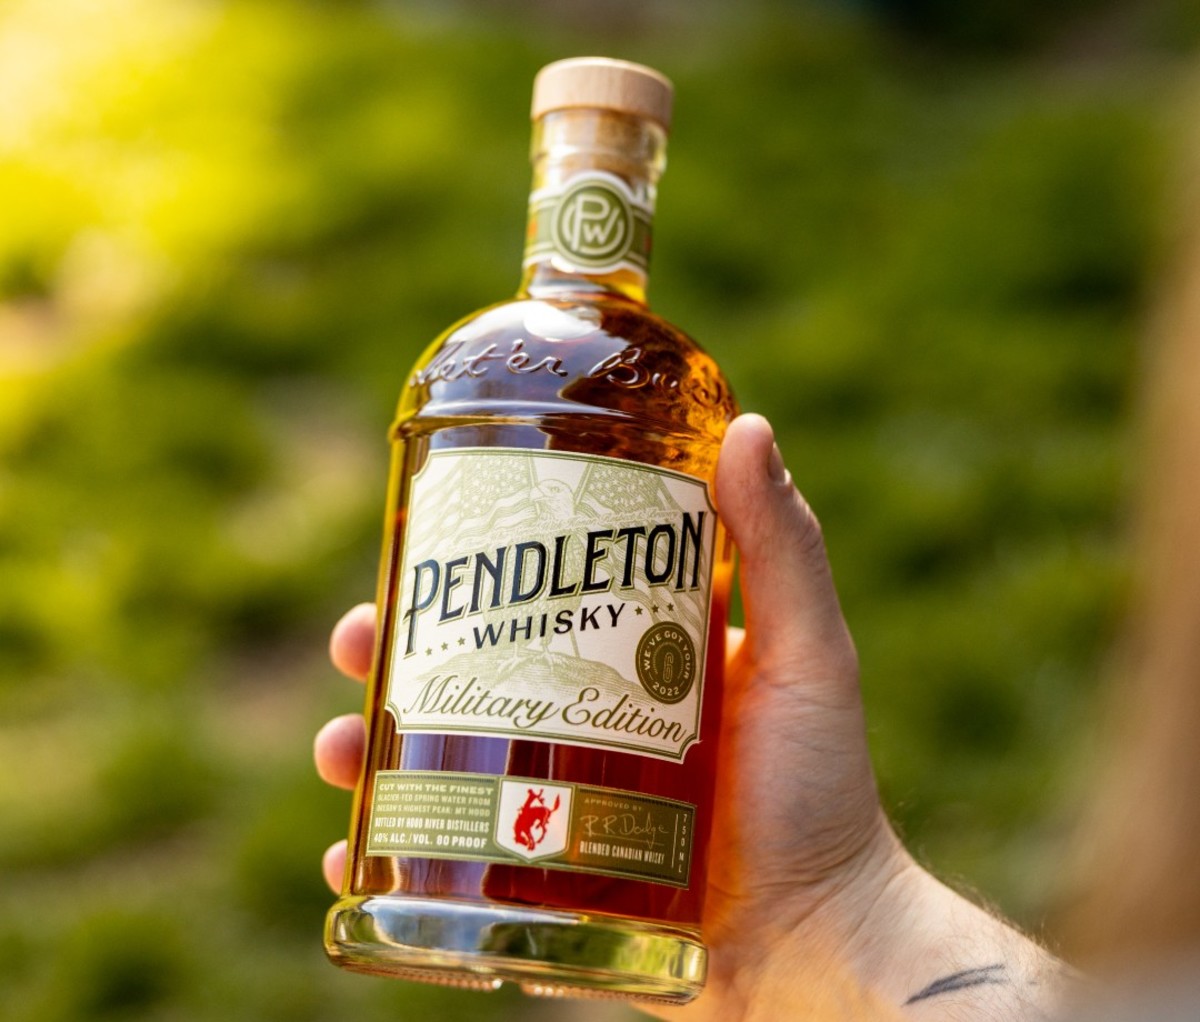 Man's hand holding Pendleton Whiskey bottle outdoors over grass